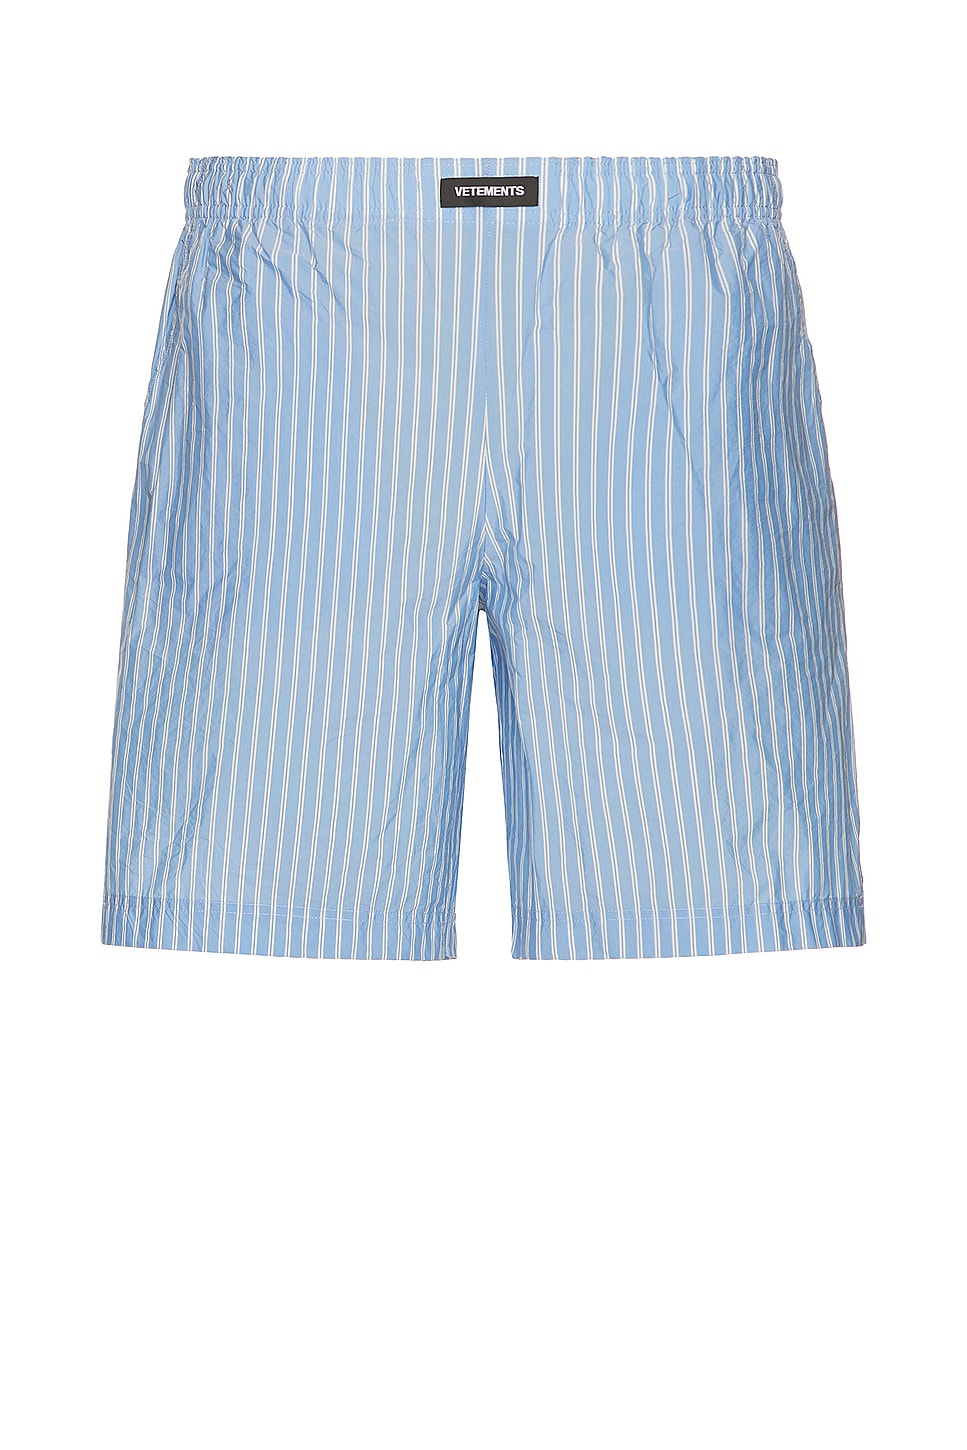 Image 1 of VETEMENTS Paper Poplin Tailored Short in Blue & Double White Stripe